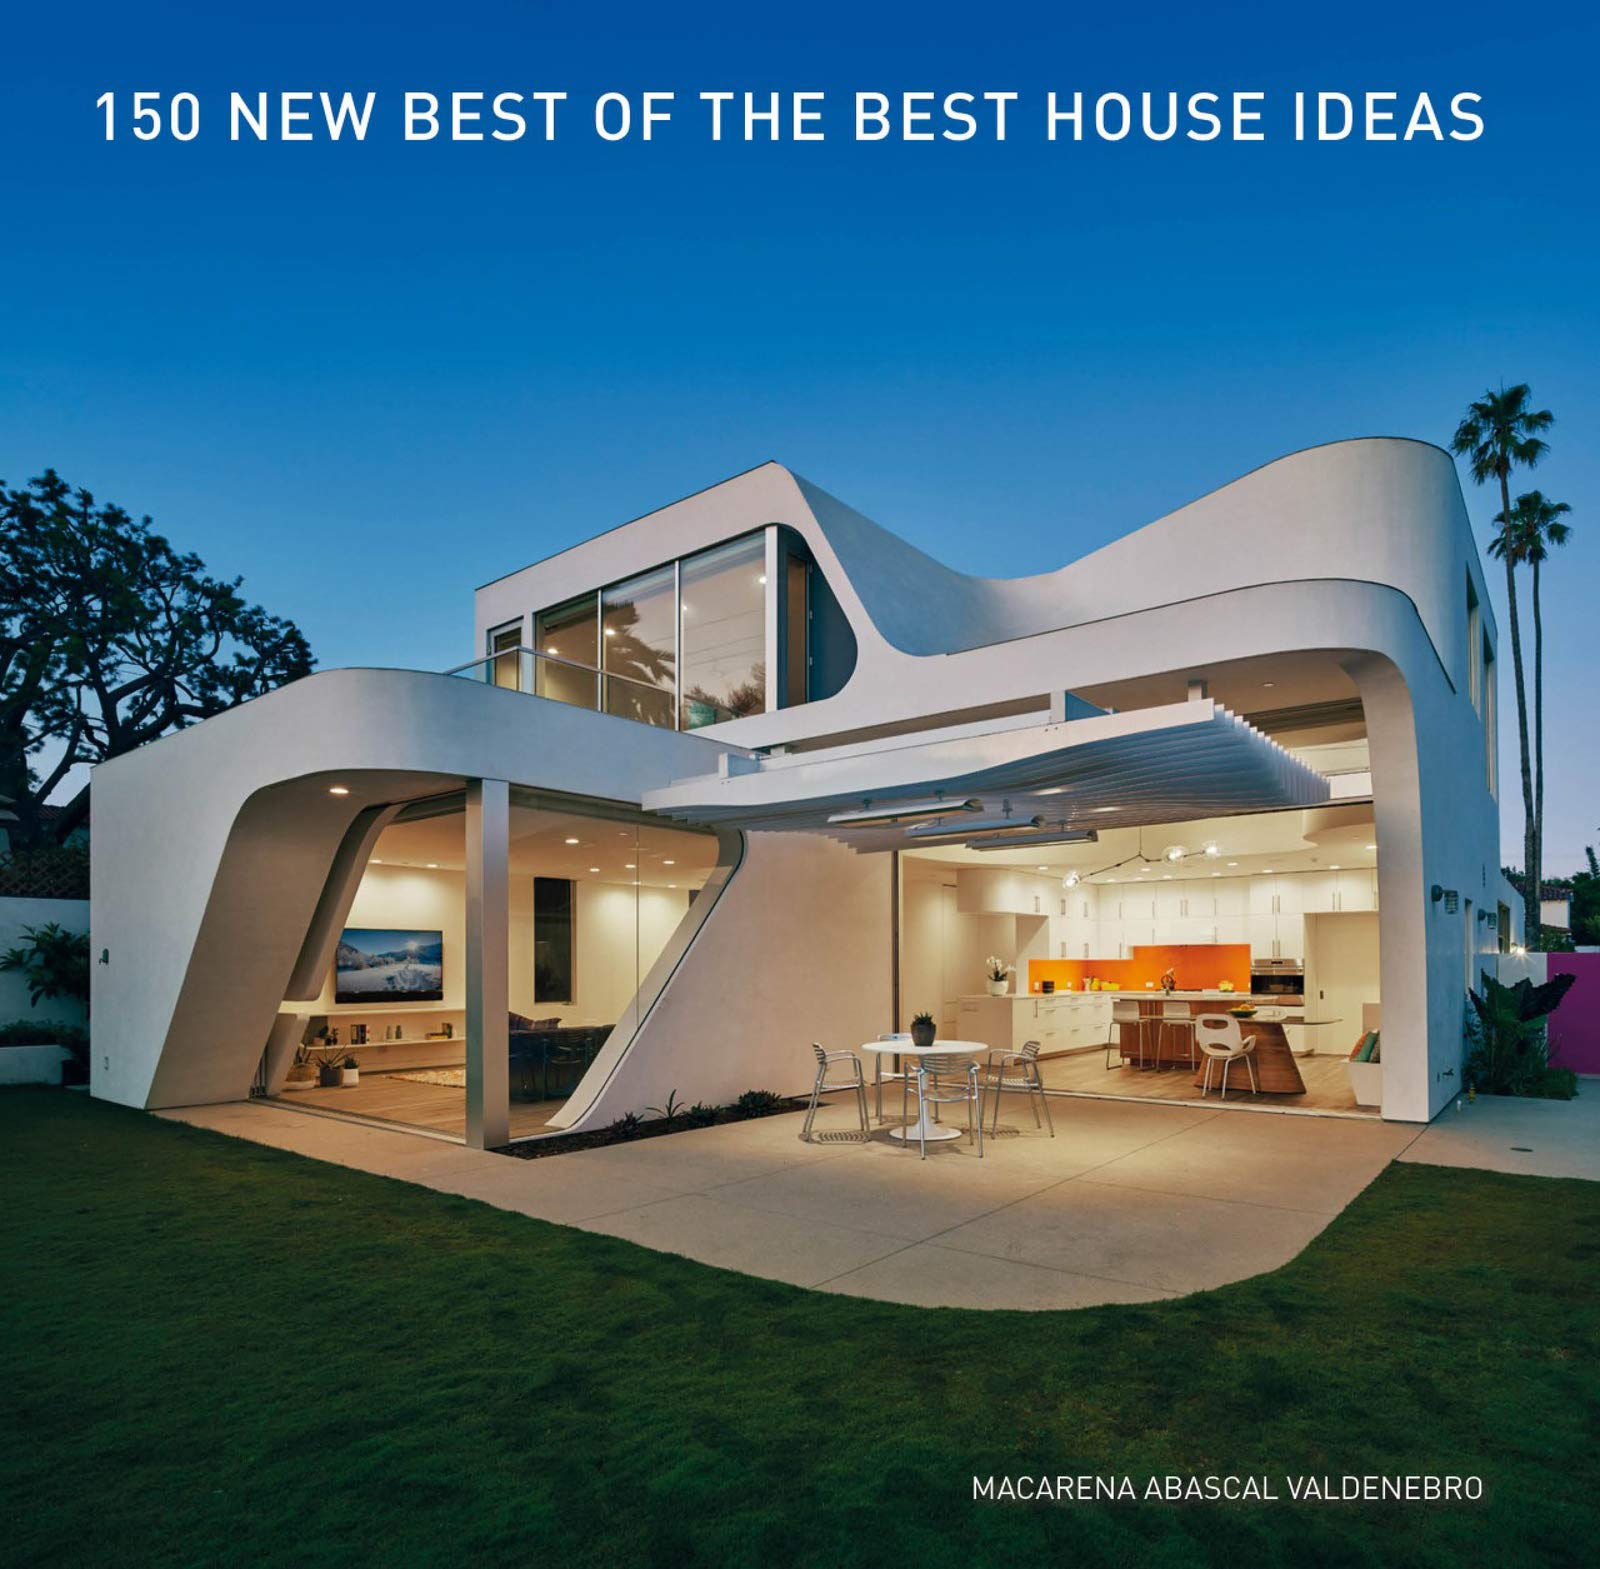 Macarena Abascal Valdenebro 150 New Best of the Best House Ideas Hardcover